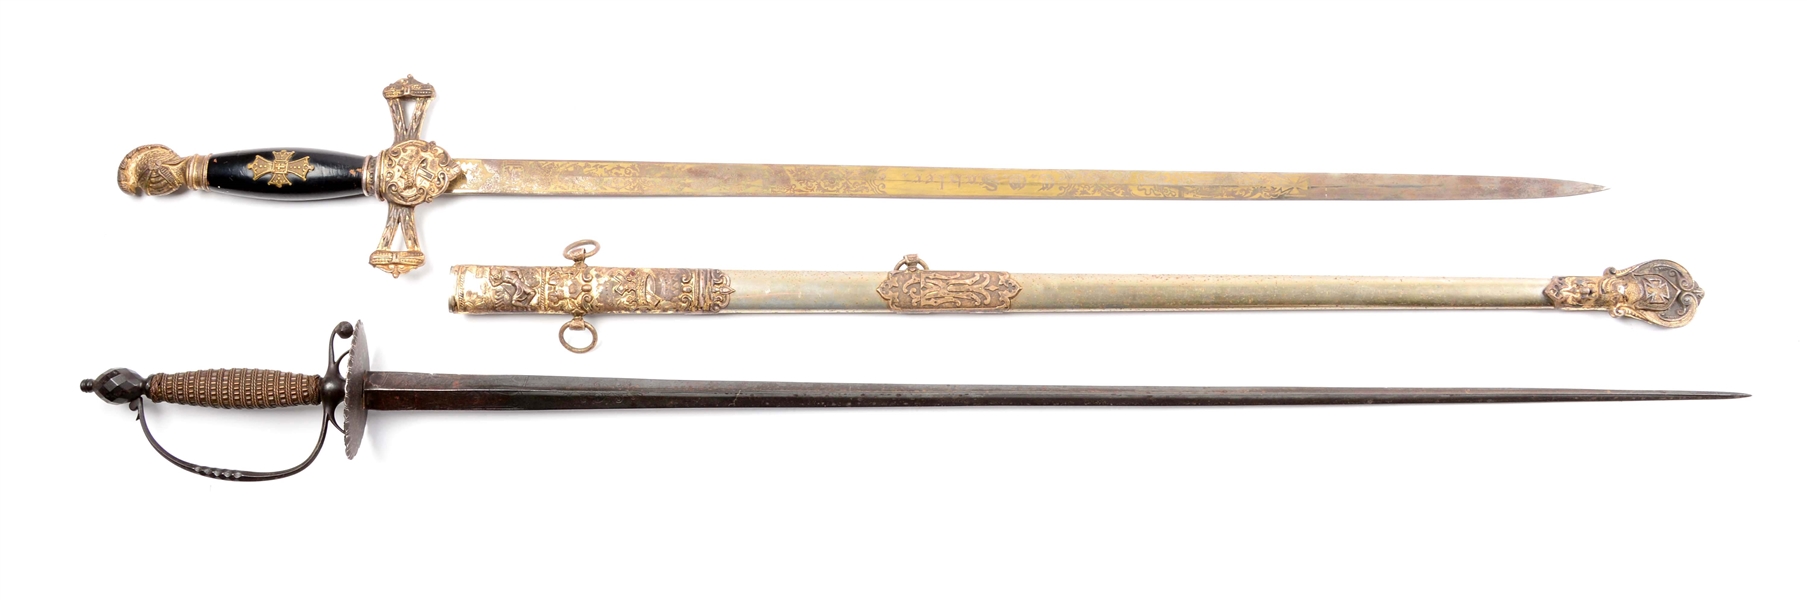 LOT OF 2: 18TH CENTURY SMALL SWORD AND MASONIC SWORD.